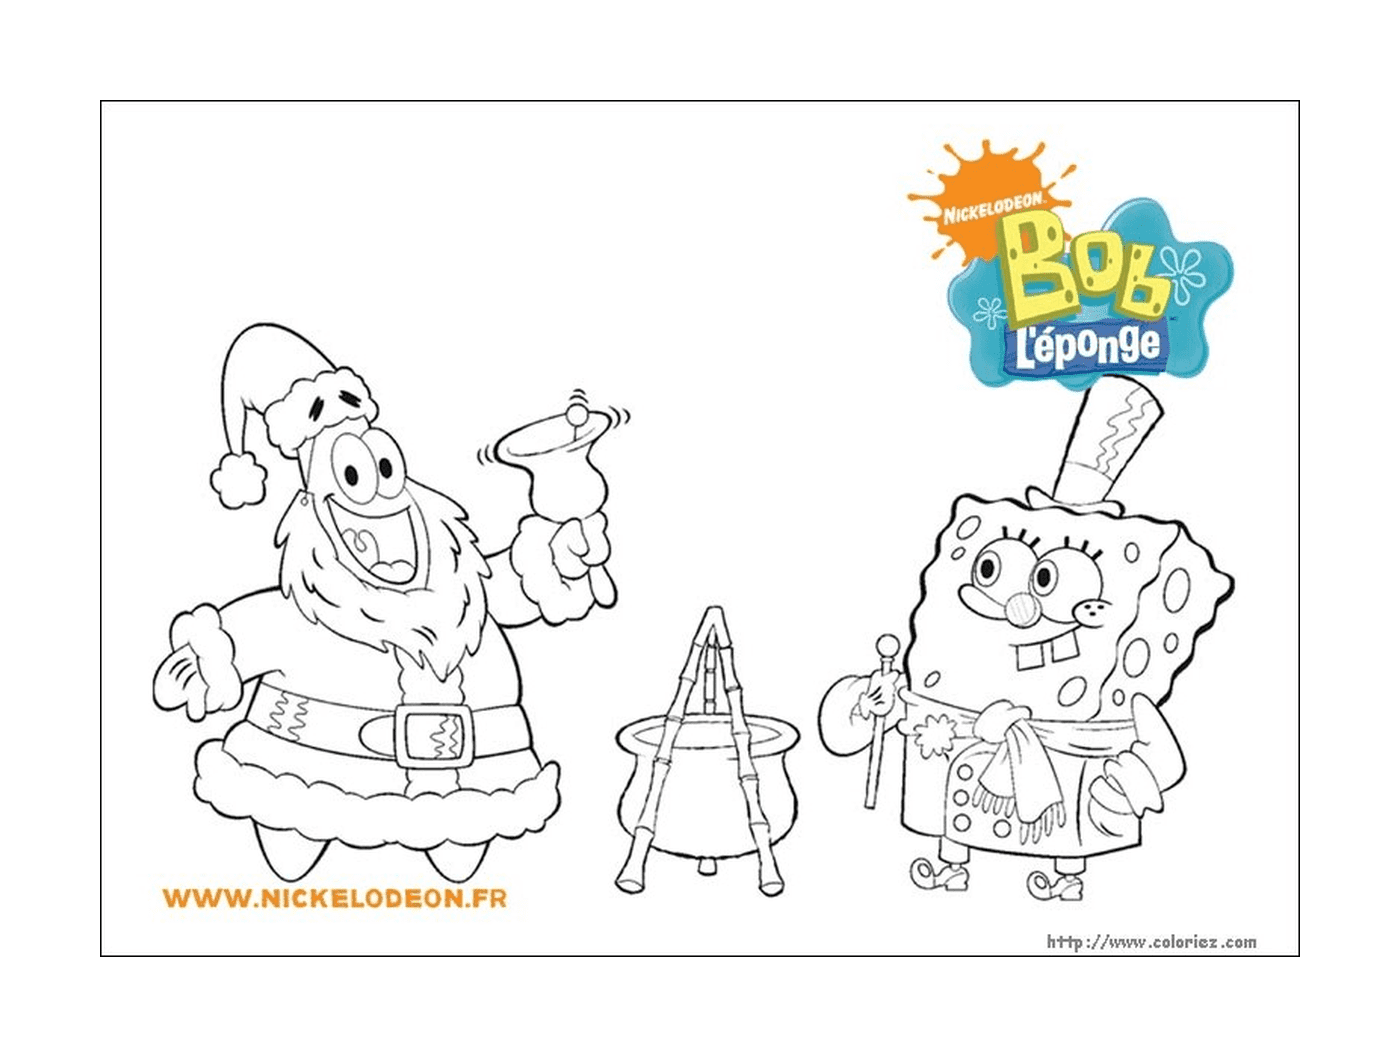  Coloring of Sponge Bob and Santa Claus 